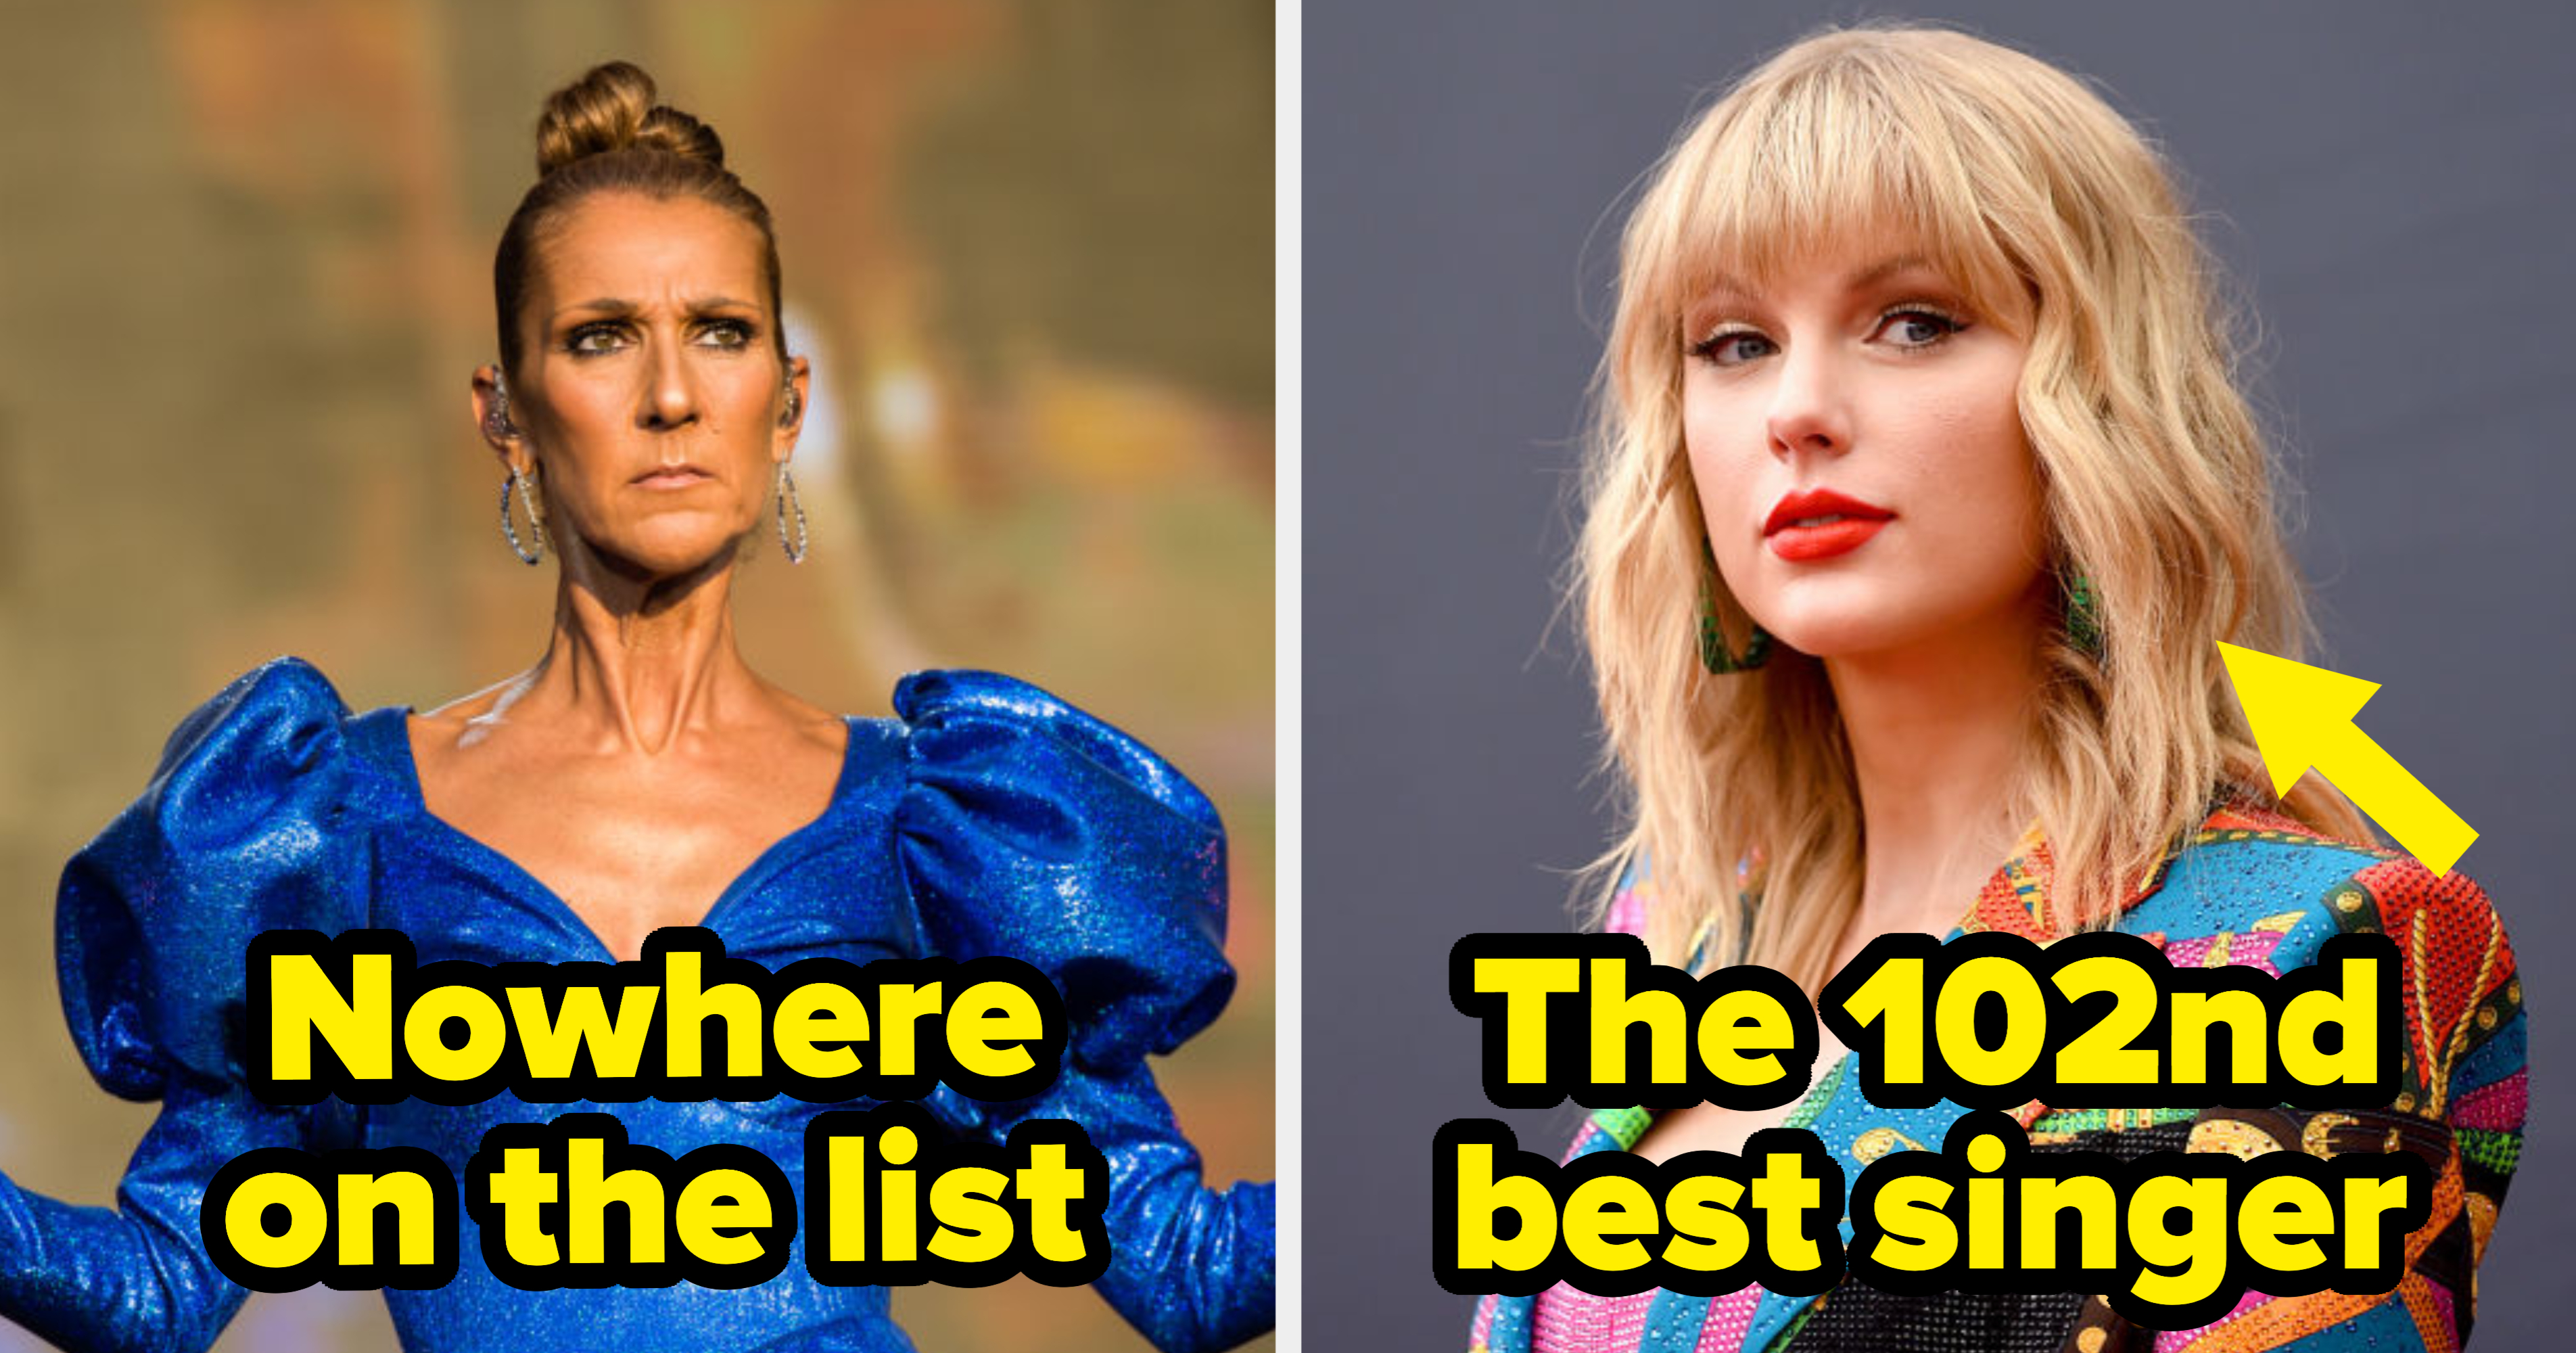 Celine Dion, Mariah Carey, Whitney Houston 🏆 Best Songs Best Of